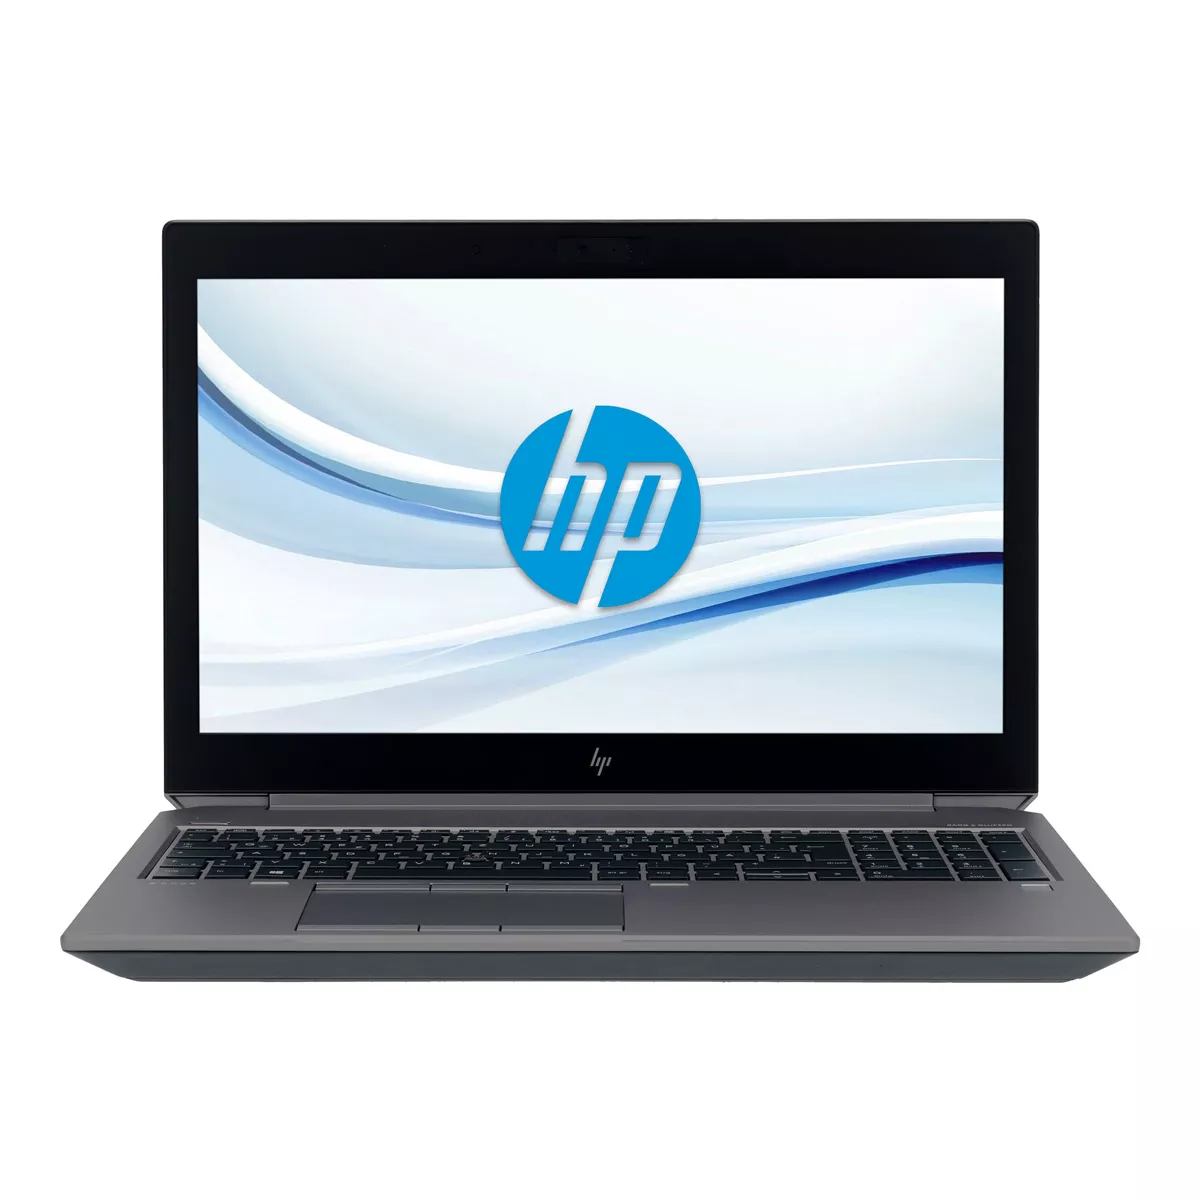 HP ZBook 15 G5 Core i7 8850H nVidia Quadro P2000M 16 GB 500 GB M.2 SSD Webcam A